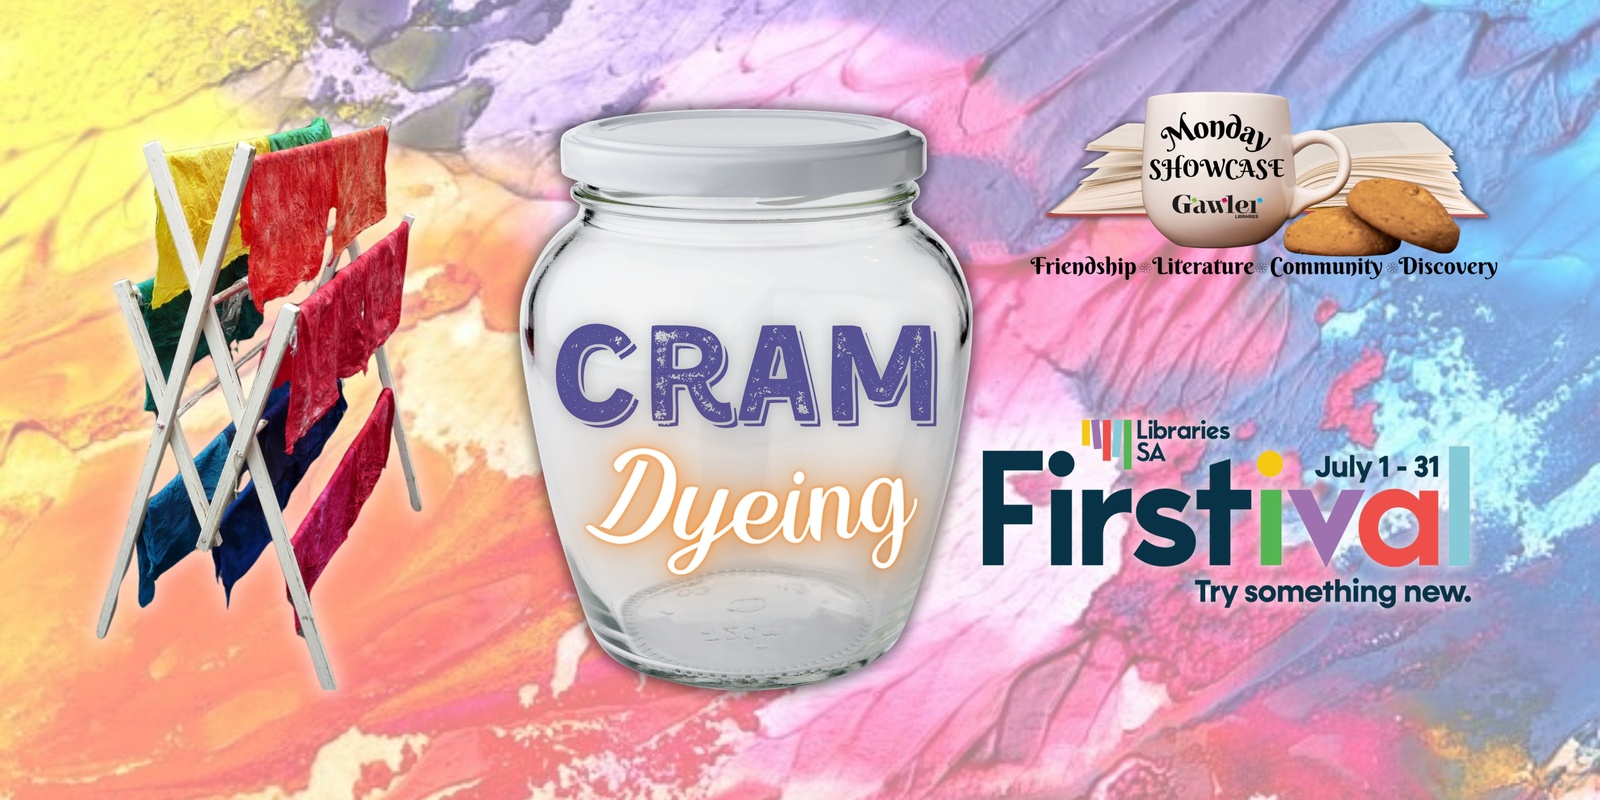 Banner image for Cram dyeing - Monday Showcase - 9:30